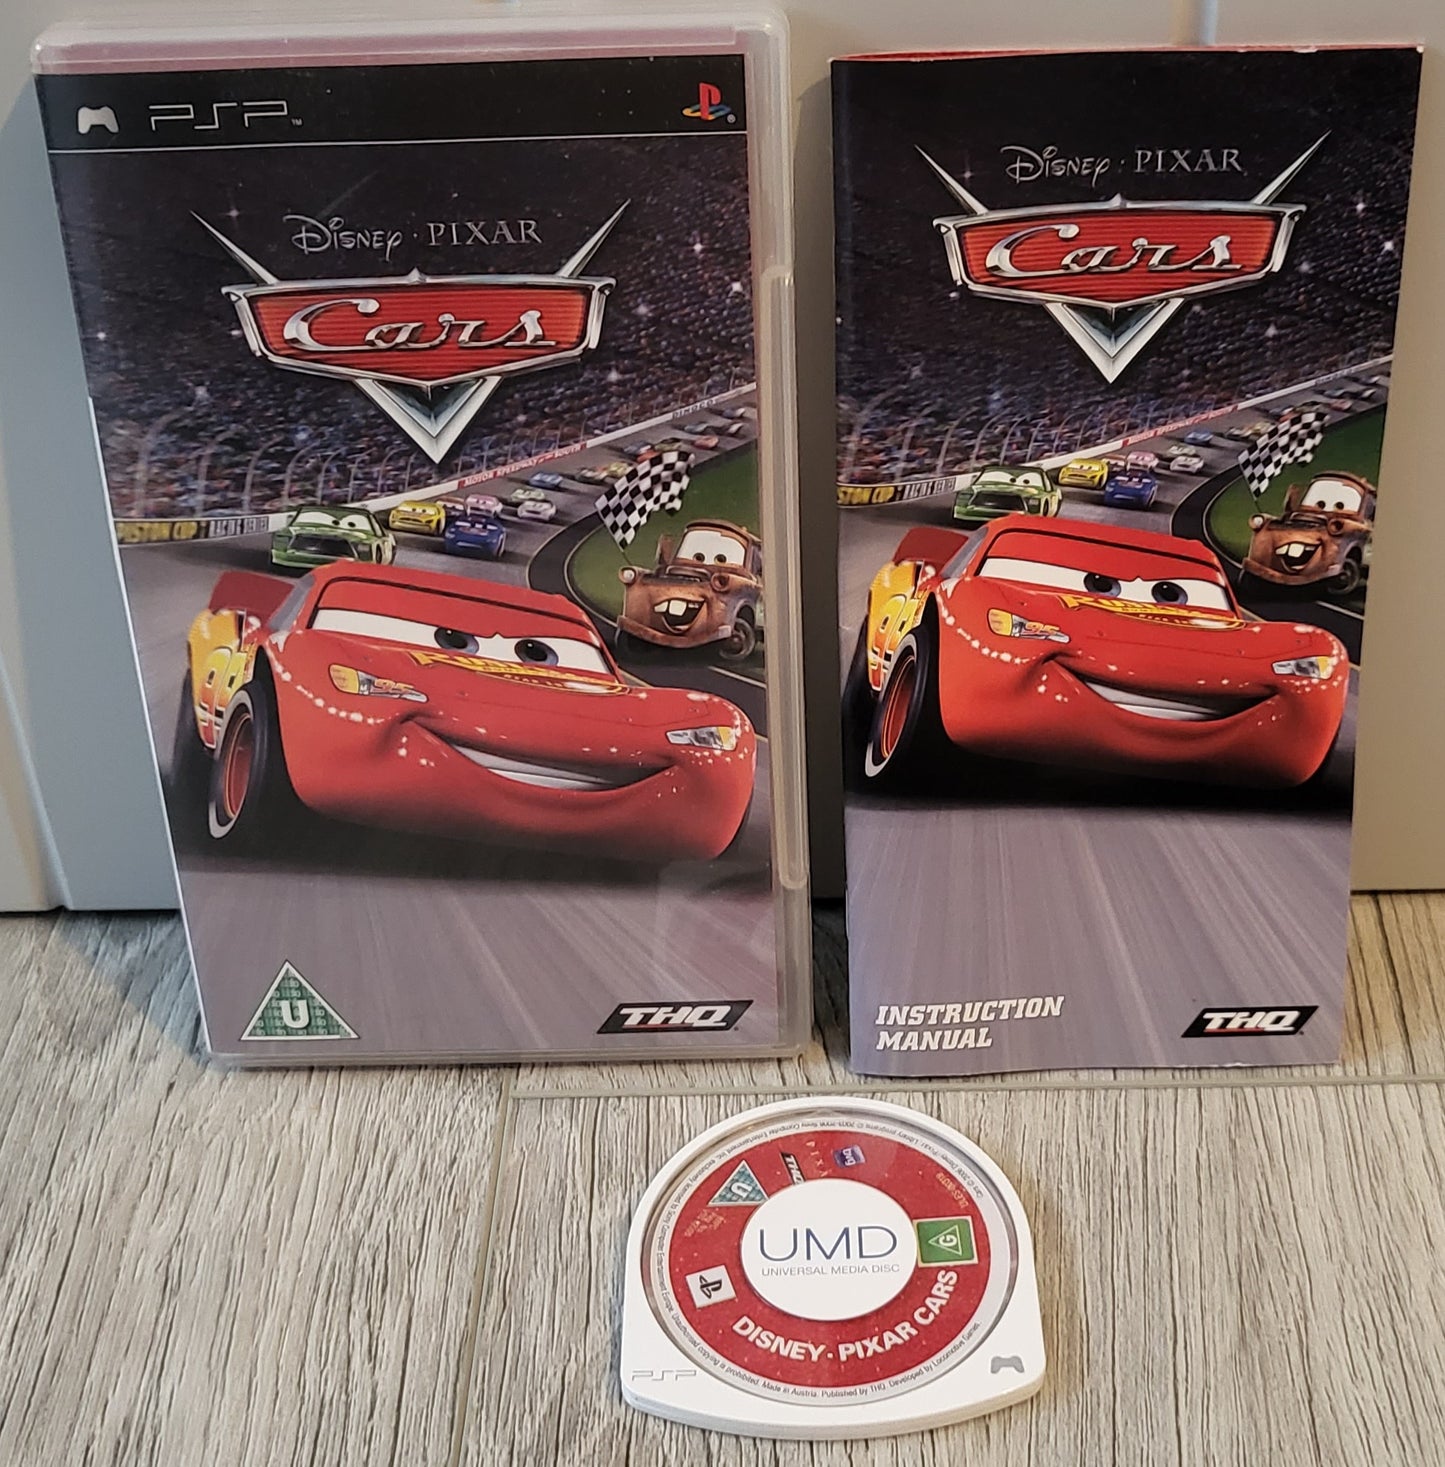 Disney Pixar Cars Sony PSP Game